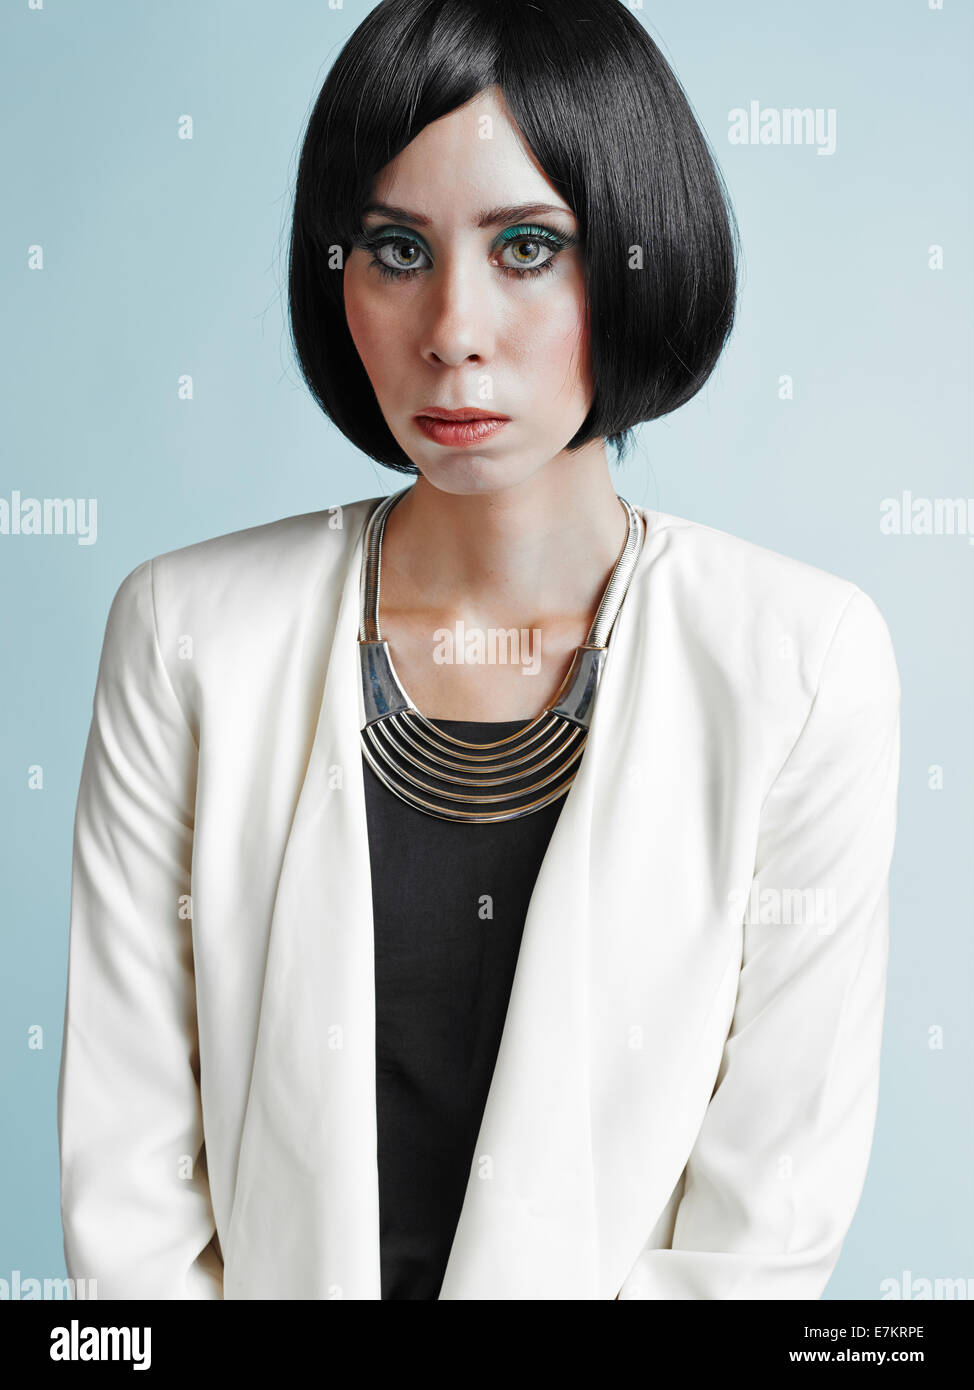 Close up portrait of beautiful young woman wearing white jacket - studio shot Stock Photo